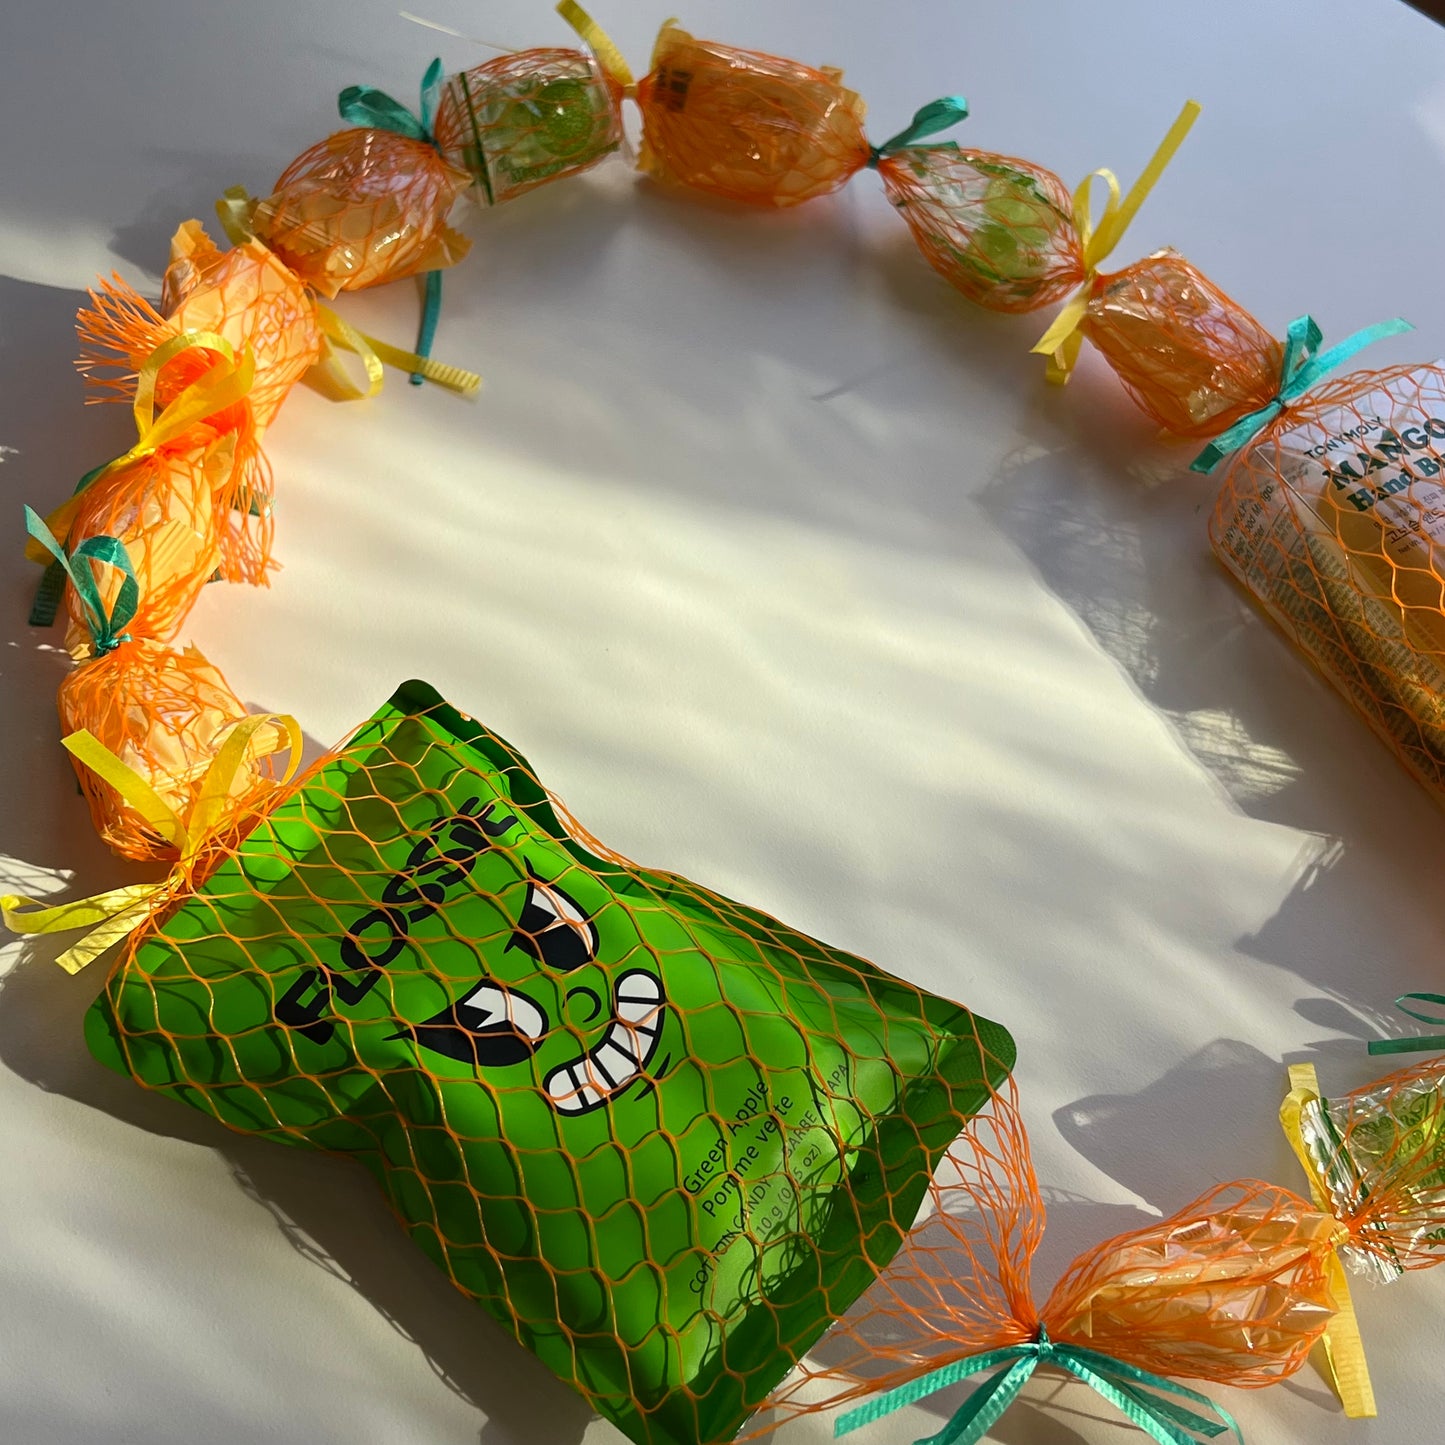 Majah Mango Candy Lei | by Daphne Kauahi’ilani Jenkins